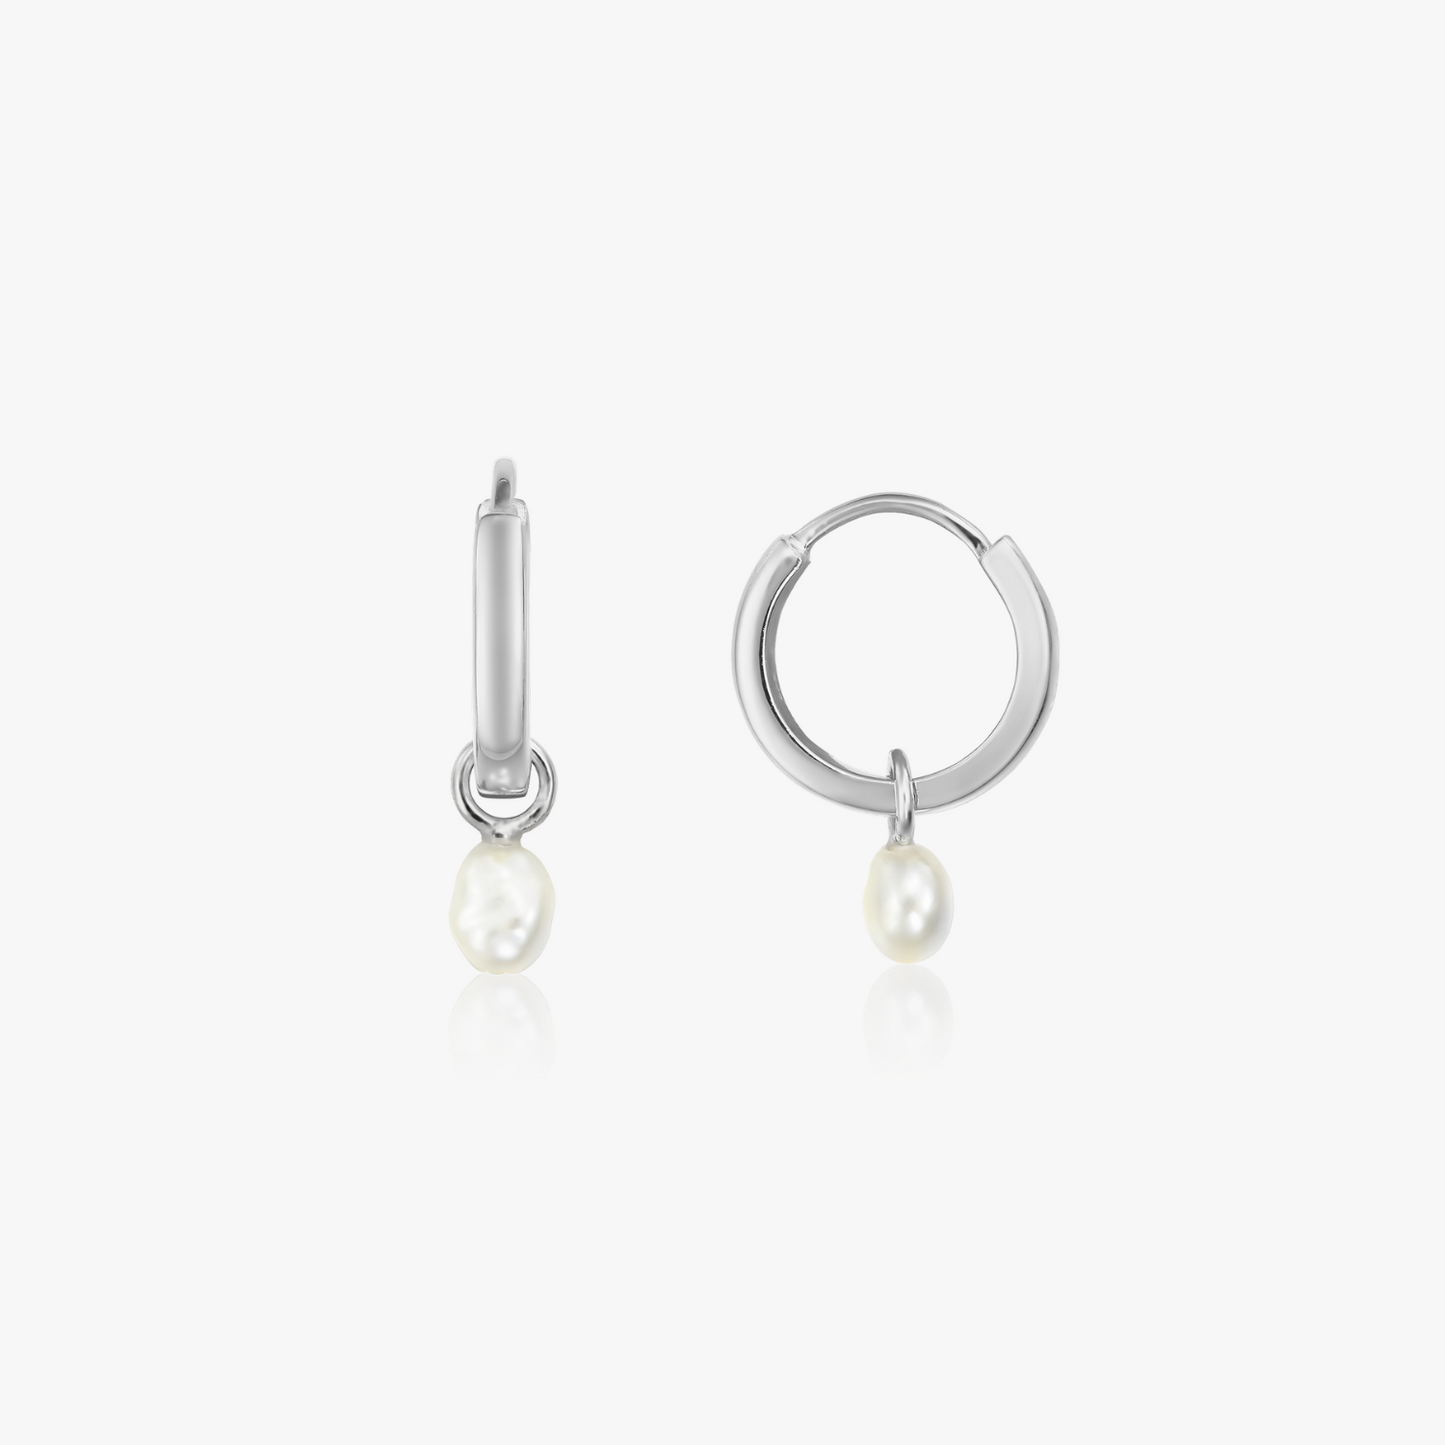 Little Drop Silver Earrings - Natural Pearls